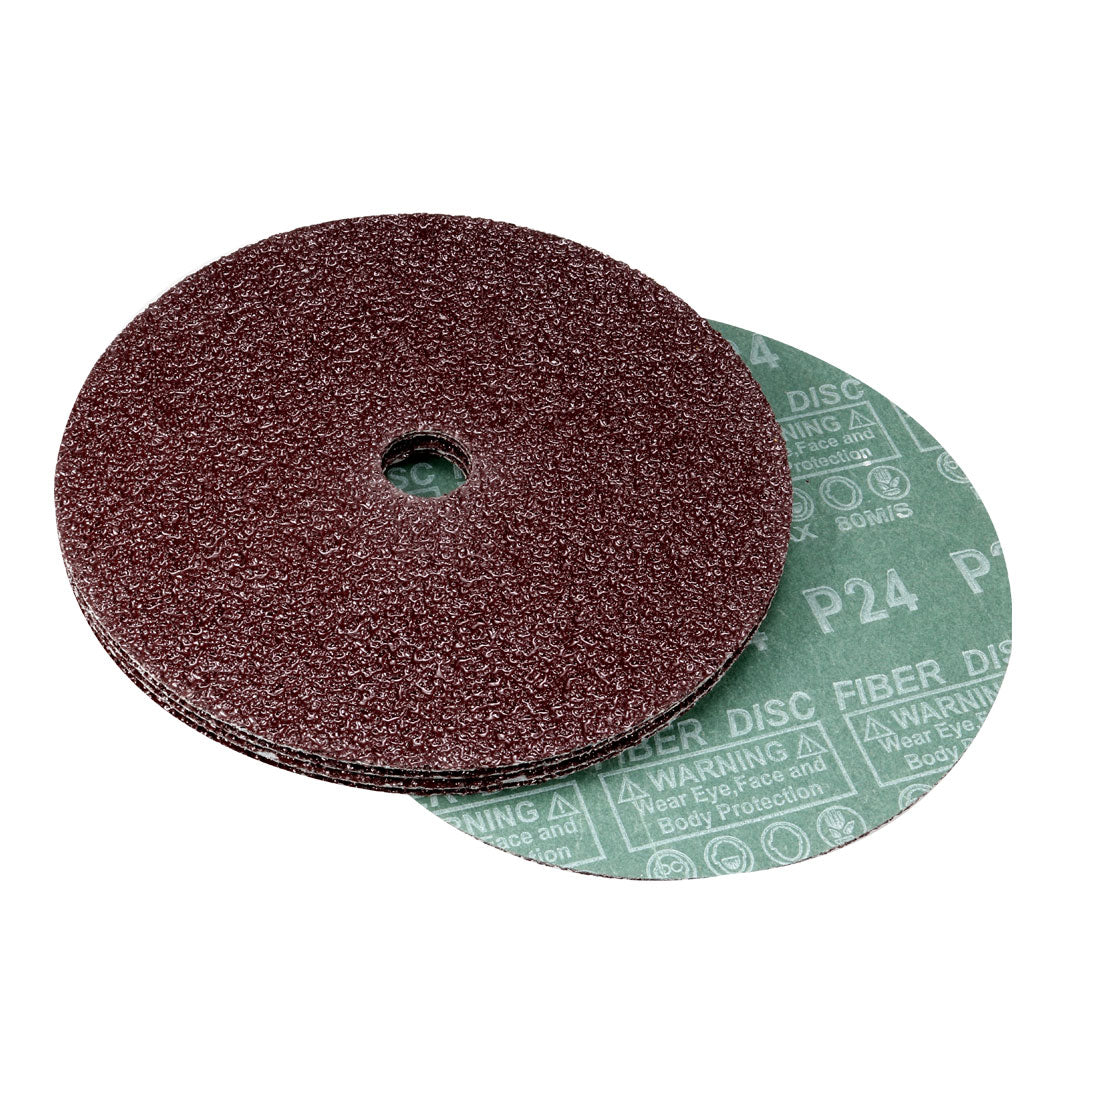 uxcell Uxcell Aluminum Oxide Resin Fiber Discs, Center Hole Sanding Grinding Discs Pad